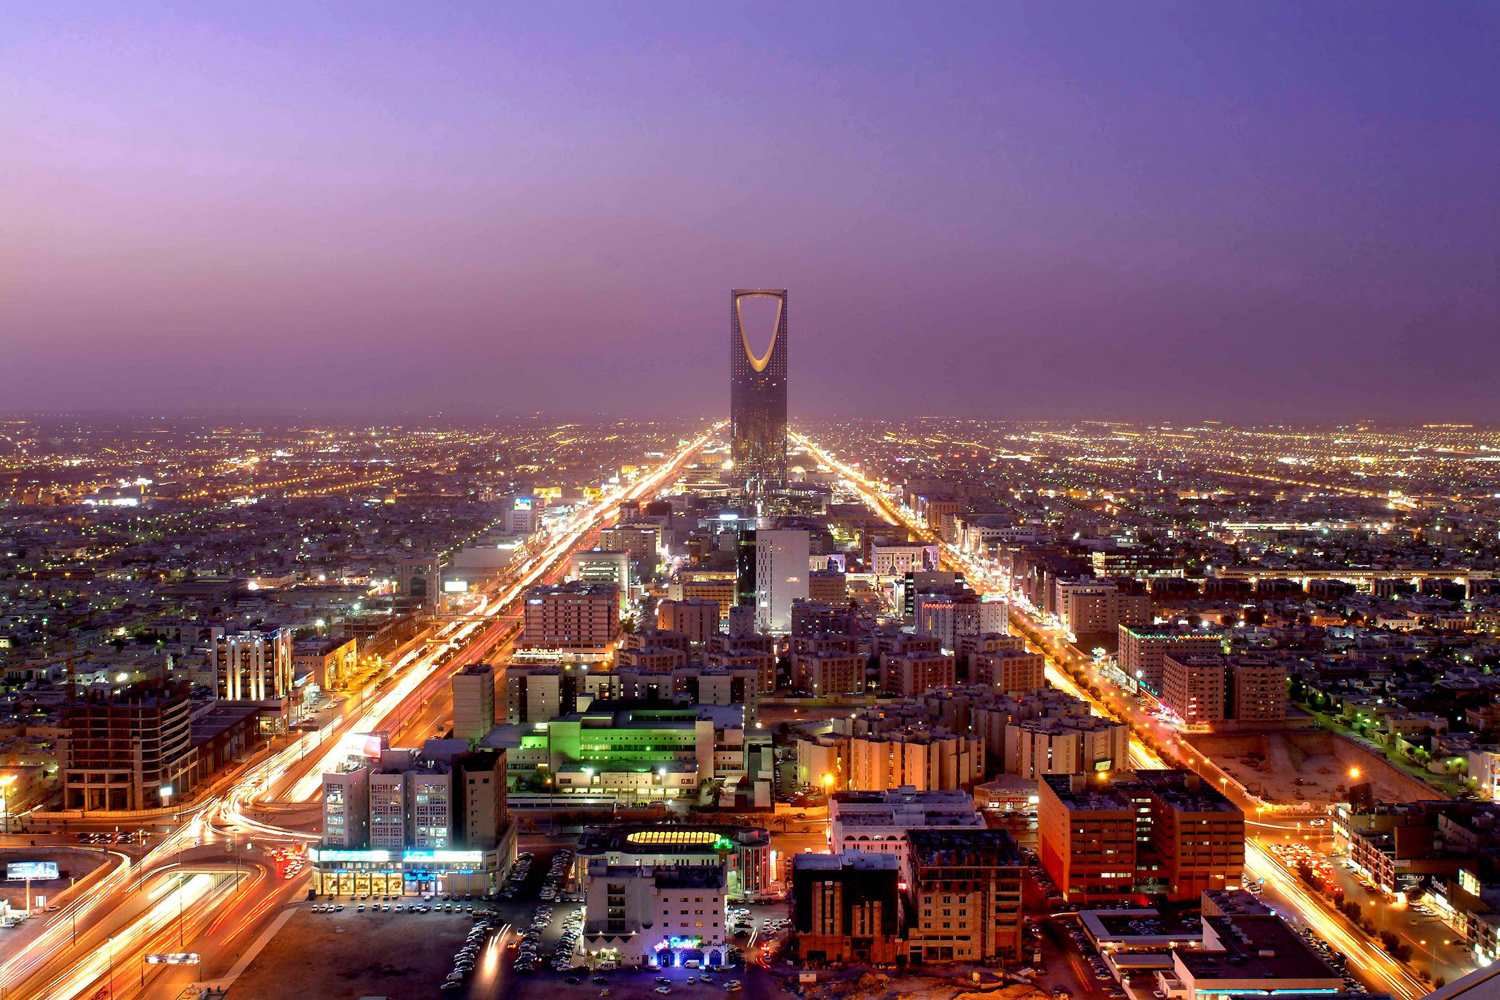 Getting around in Riyadh, Jeddah and the Eastern Province | Travel